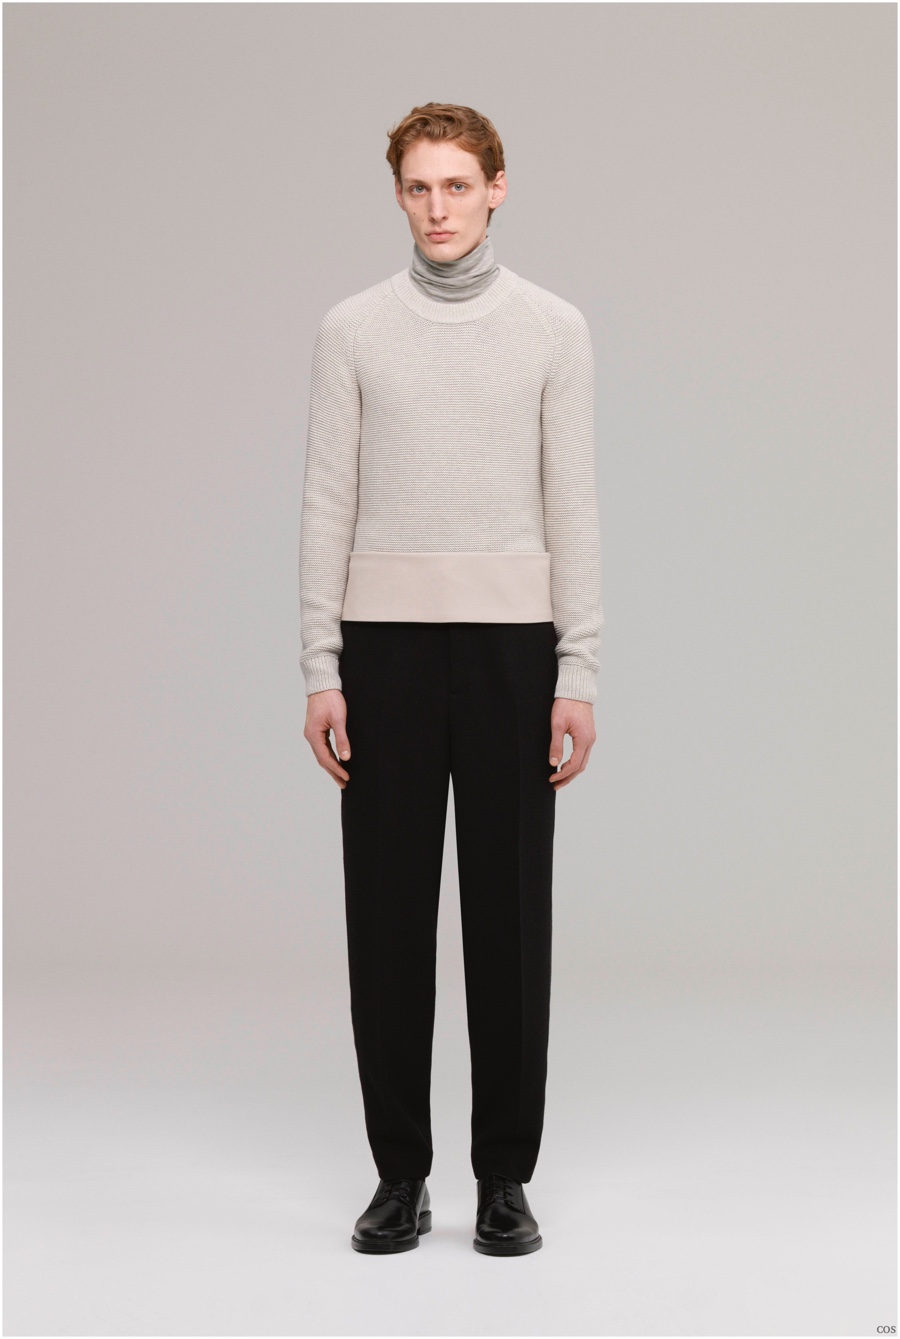 COS Fall/Winter 2015 Menswear Collection | The Fashionisto